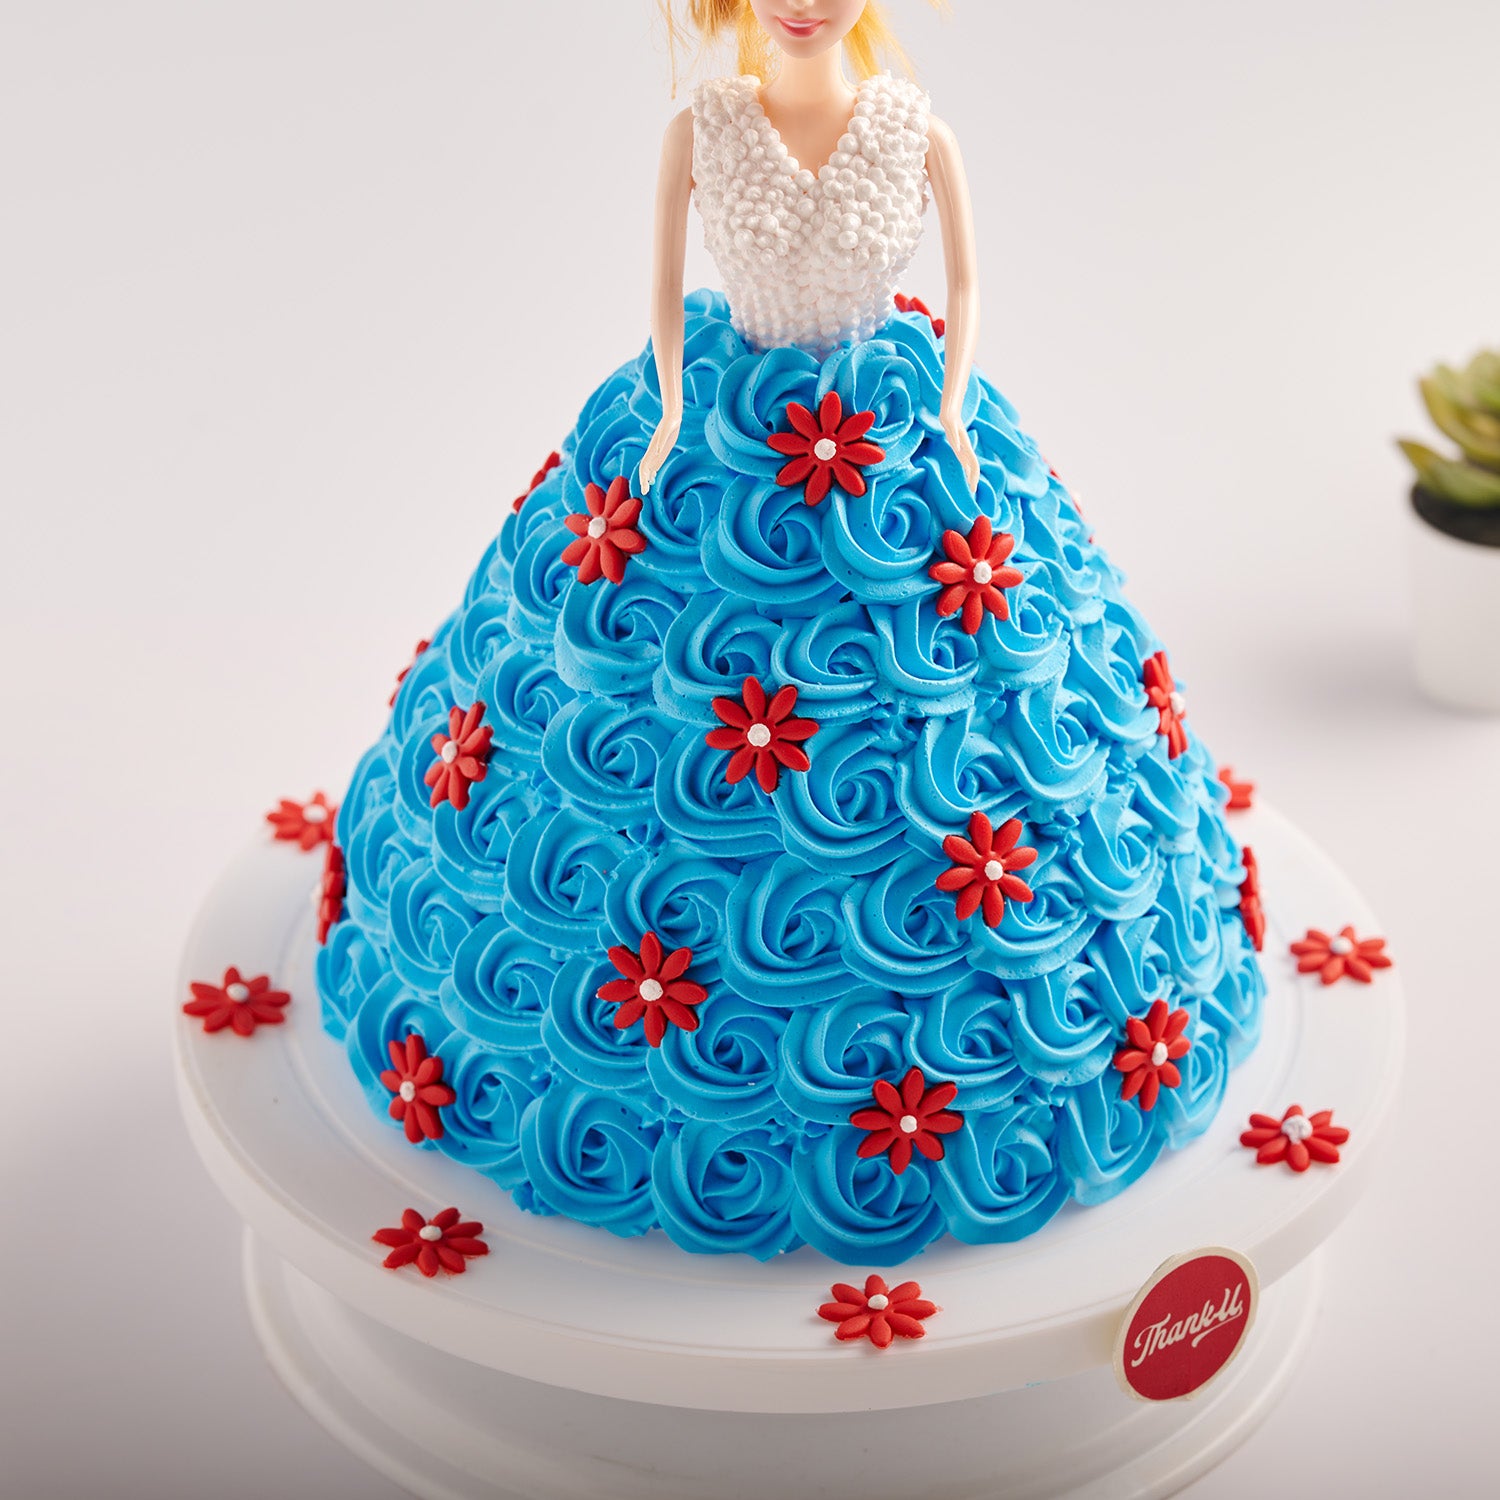 Doll Cake Design Ideas on Baby Girl's Birthday